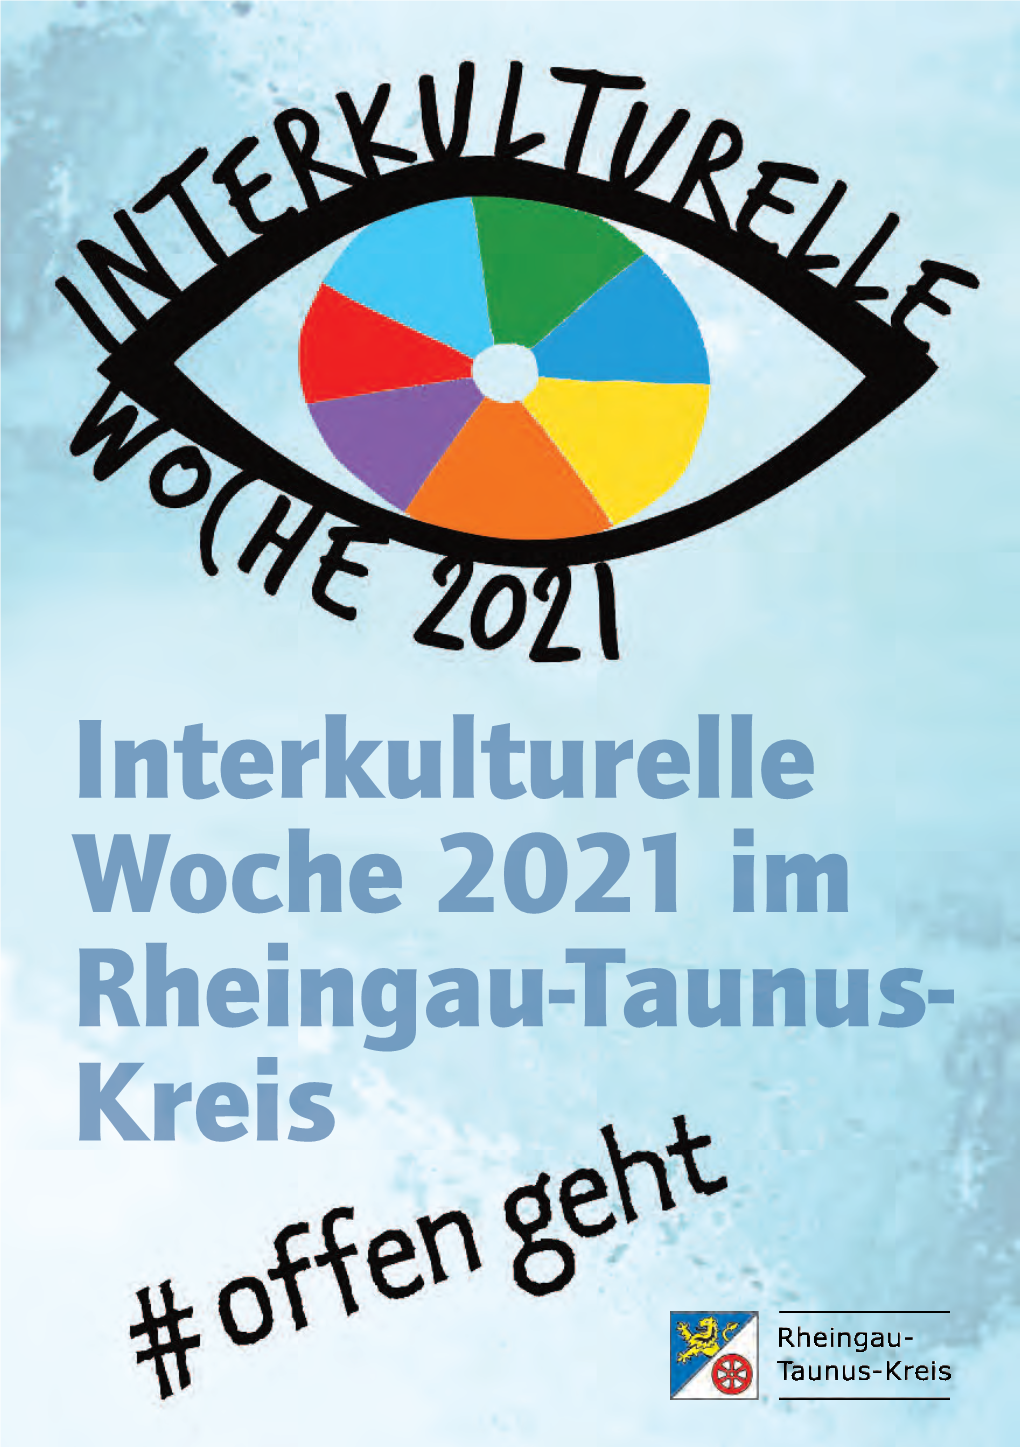 Interkulturelle Woche 2021 Im Rheingau-Taunus- Kreis Programm Der Interkulturellen Woche 2021 Im Rheingau-Taunus-Kreis